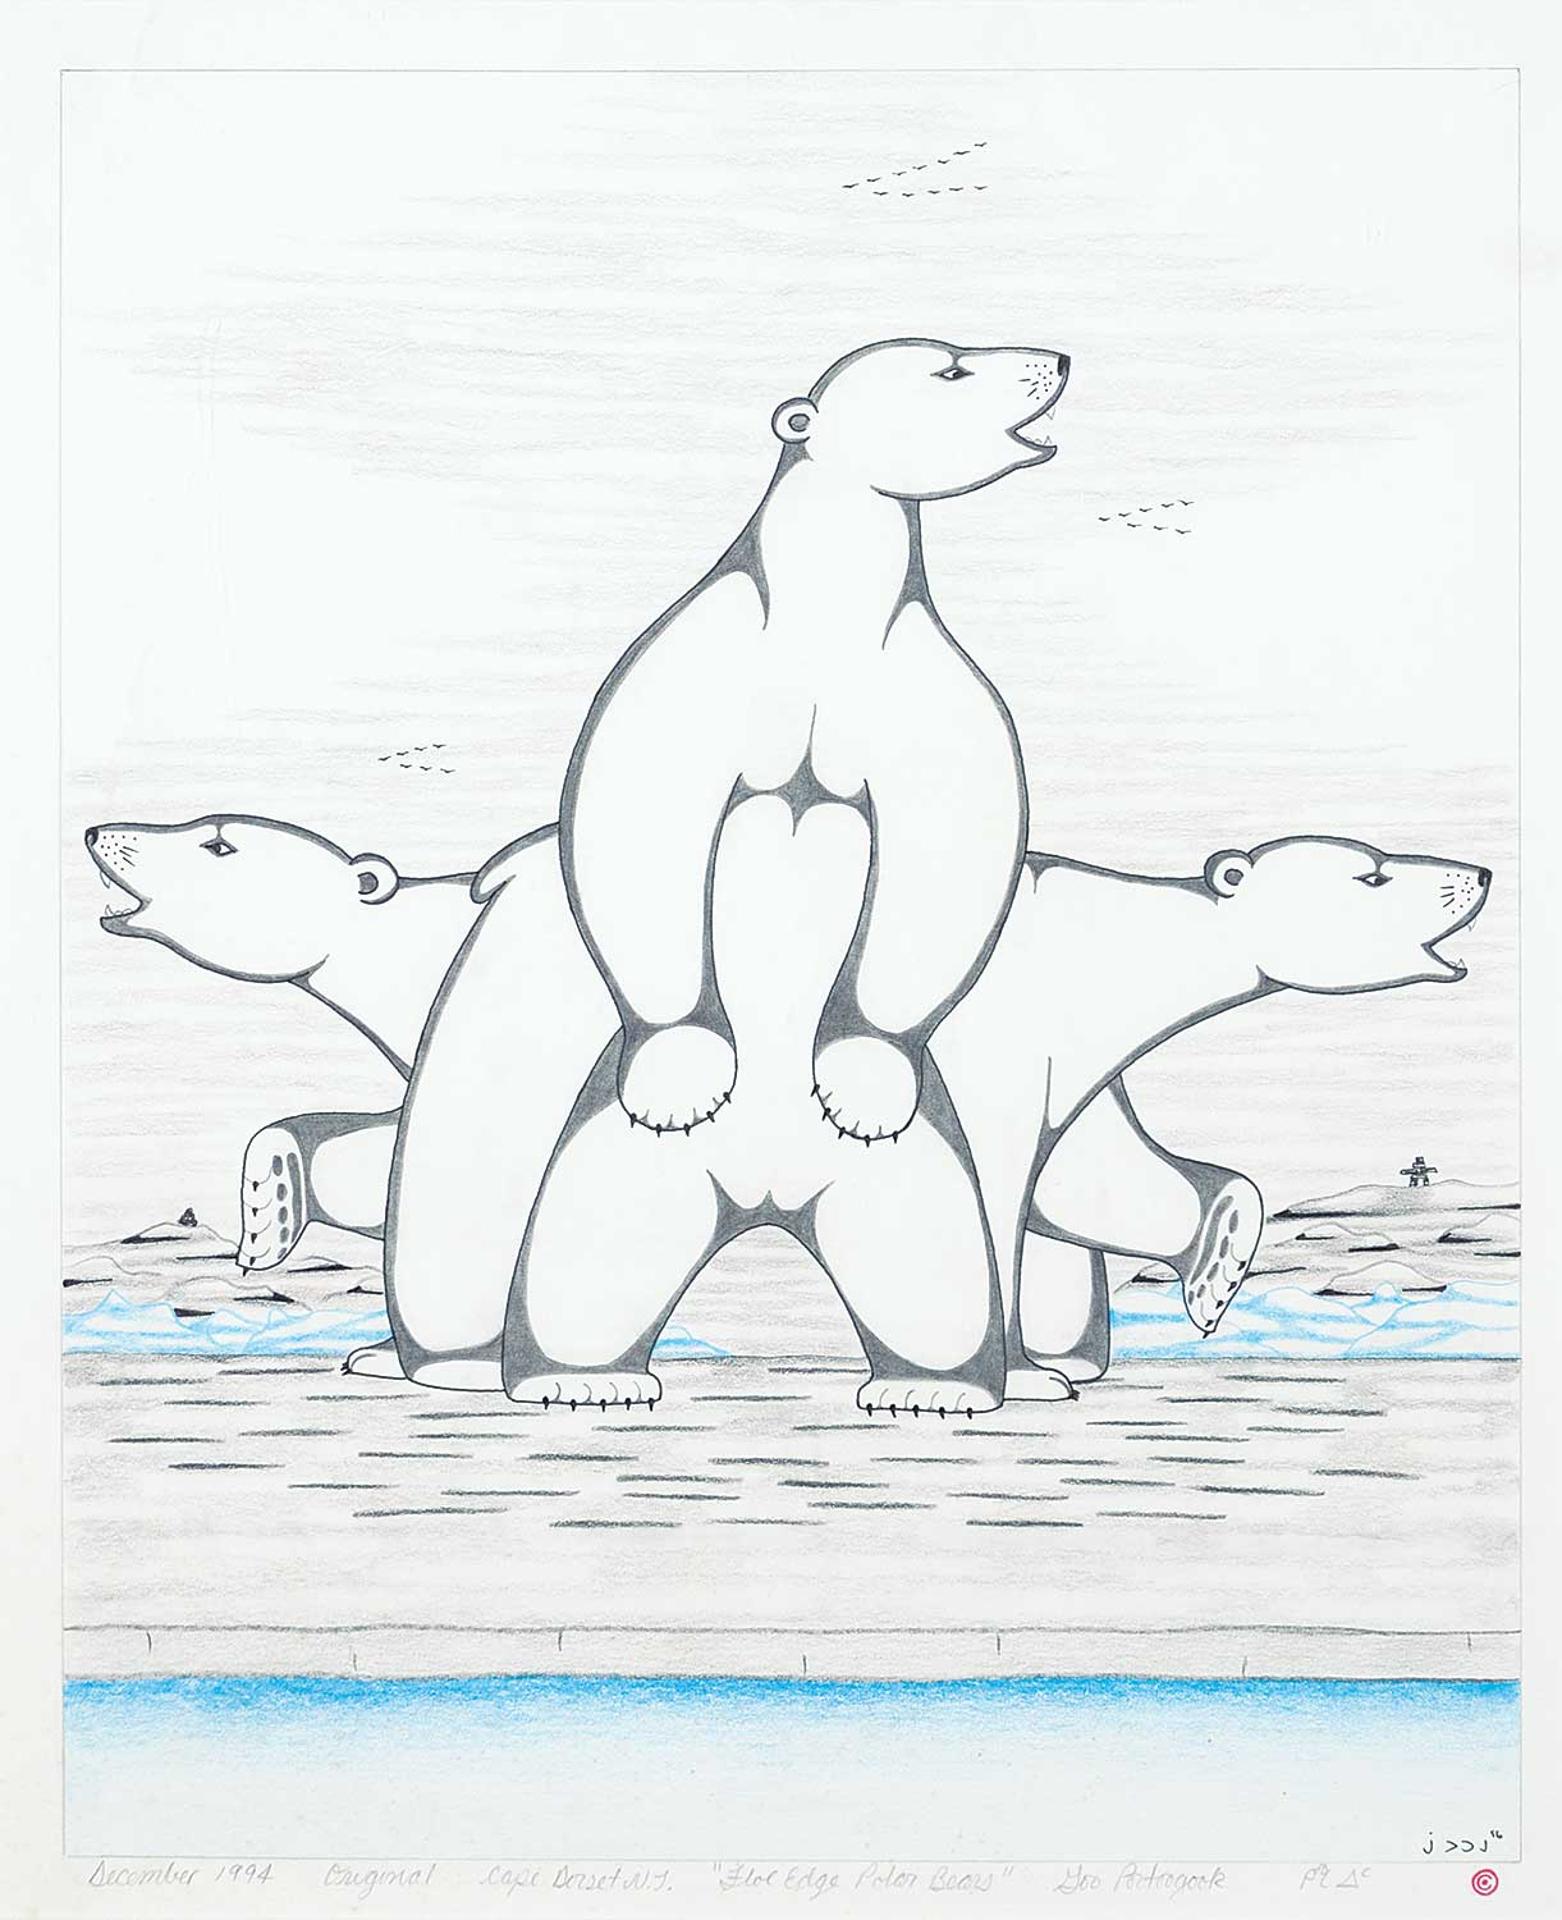 Goo Pootoogook (1957) - Floe Edge Polar Bears